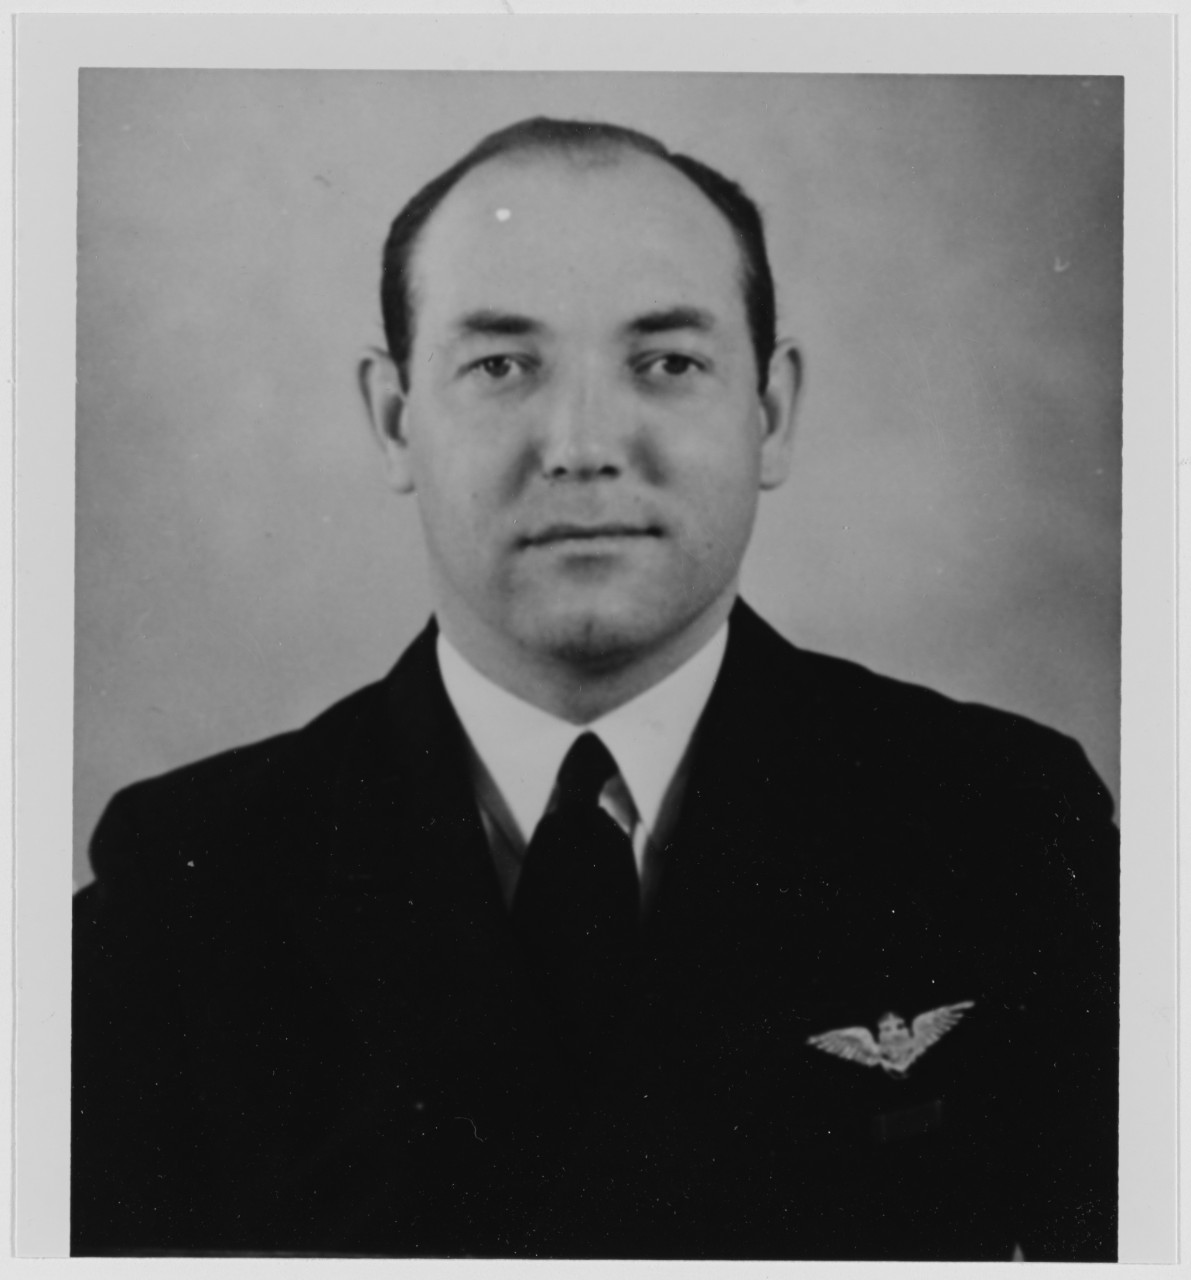 Lieutenant James W. Robb, Jr., USN. Pearl Harbor, December 7, 1941